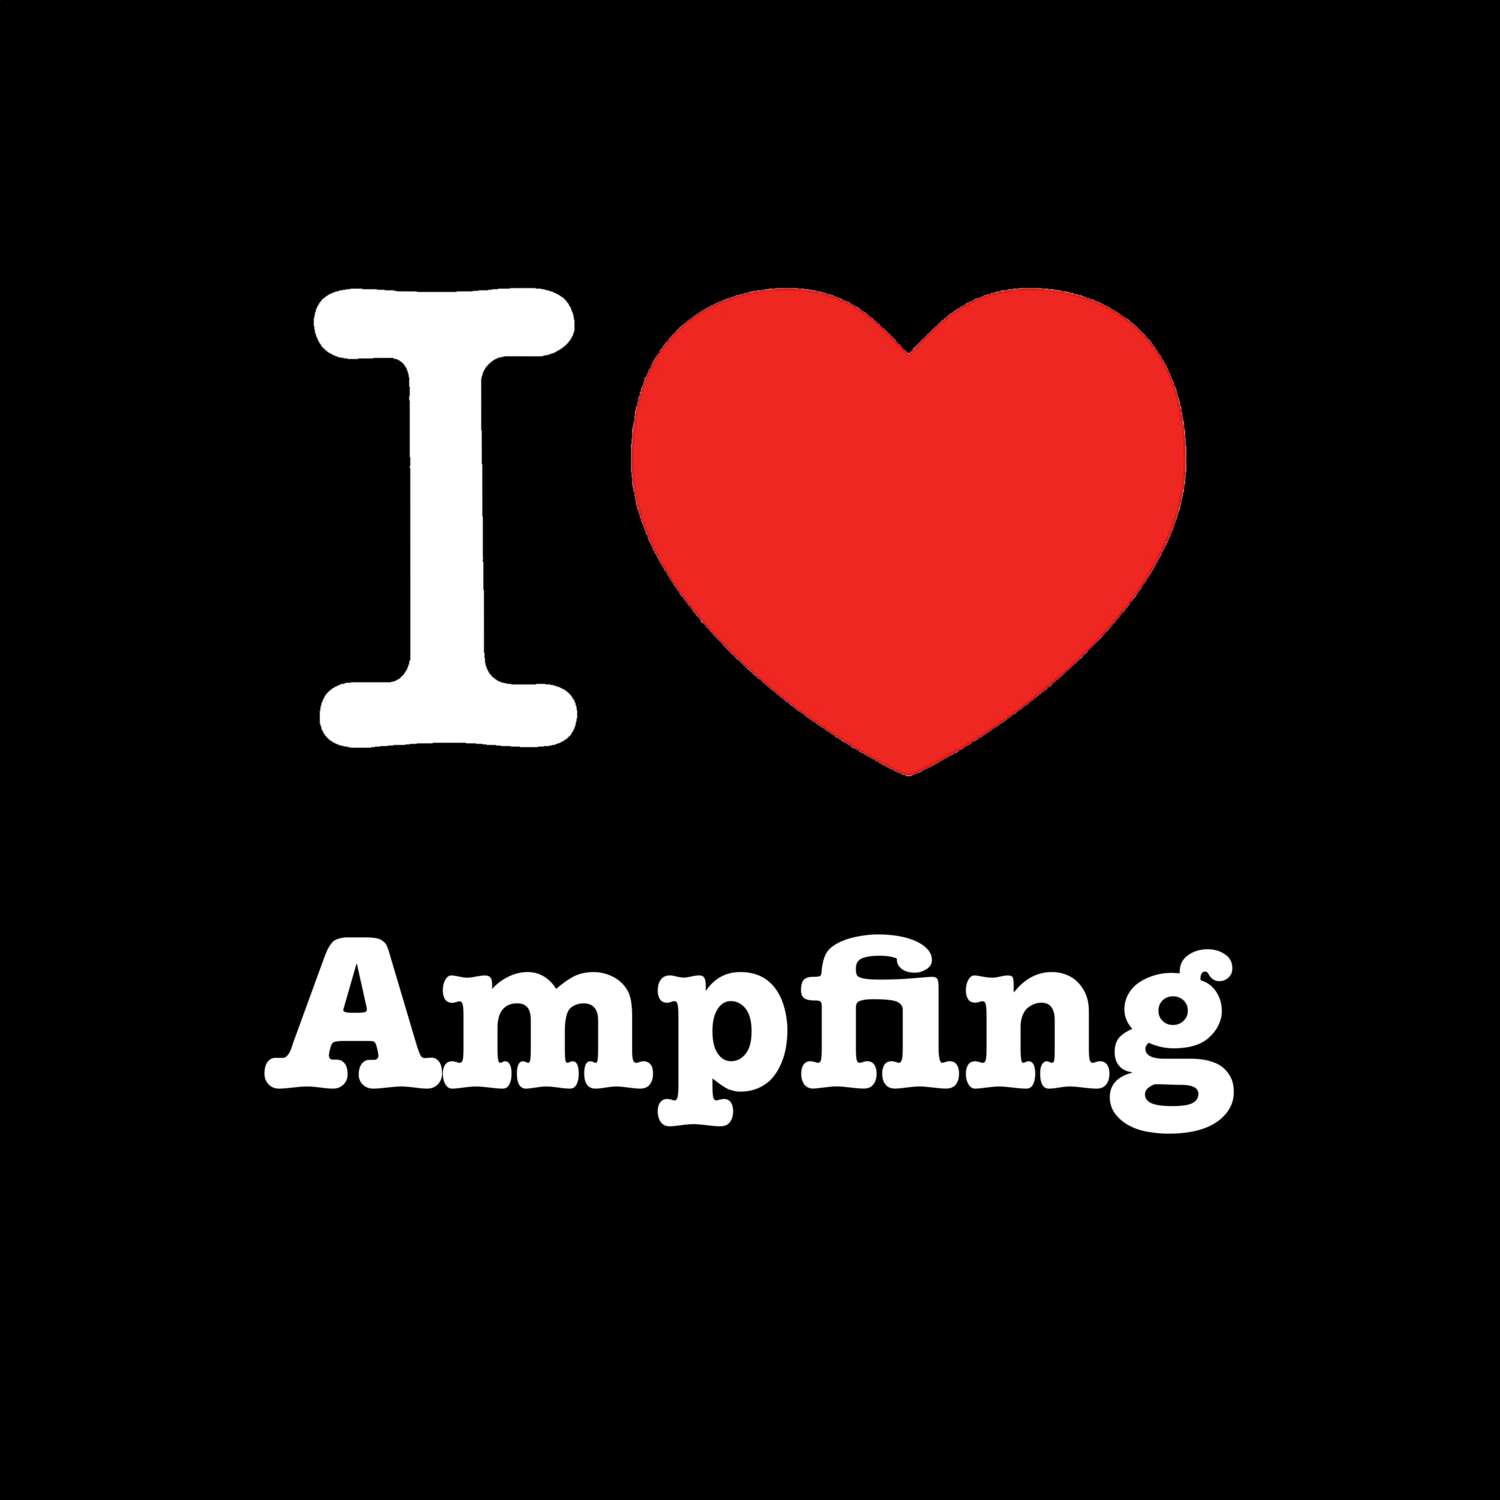 Ampfing T-Shirt »I love«